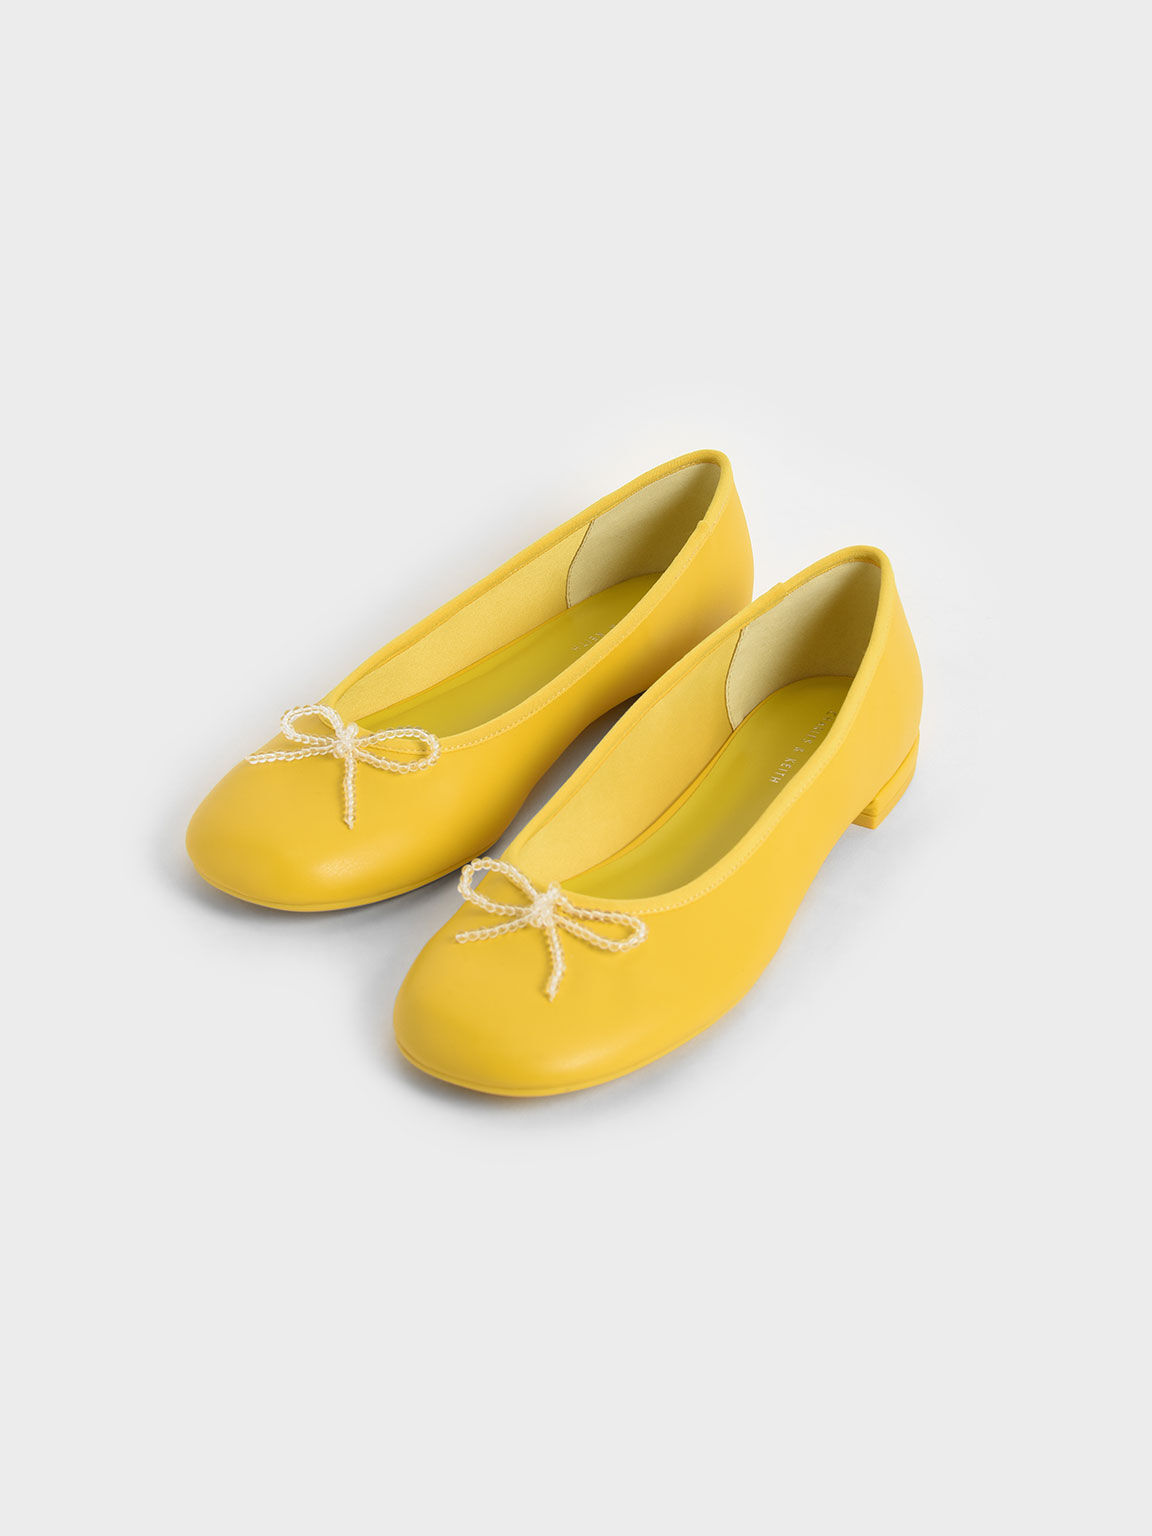 Bead Embellished Bow-Tie Ballerina Flats, Yellow, hi-res